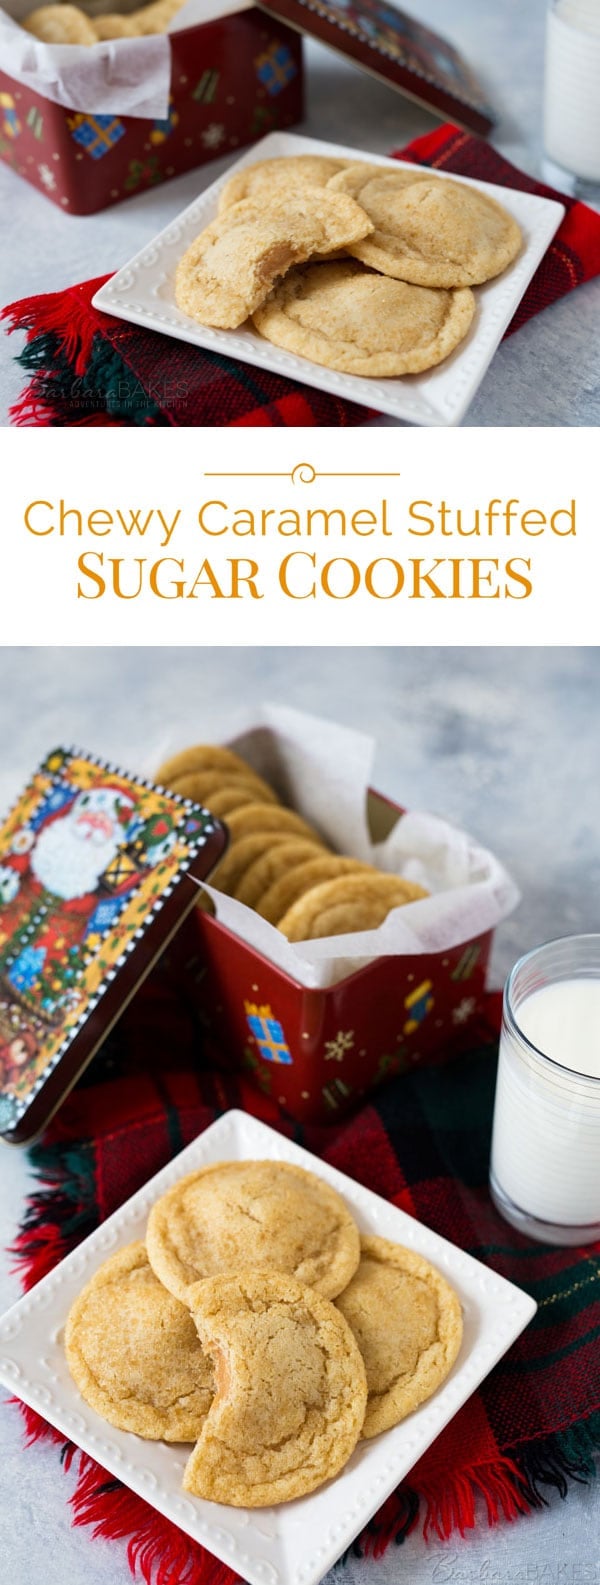 Chewy-Caramel-Stuffed-Sugar-Cookies-Collage-Barbara-Bakes